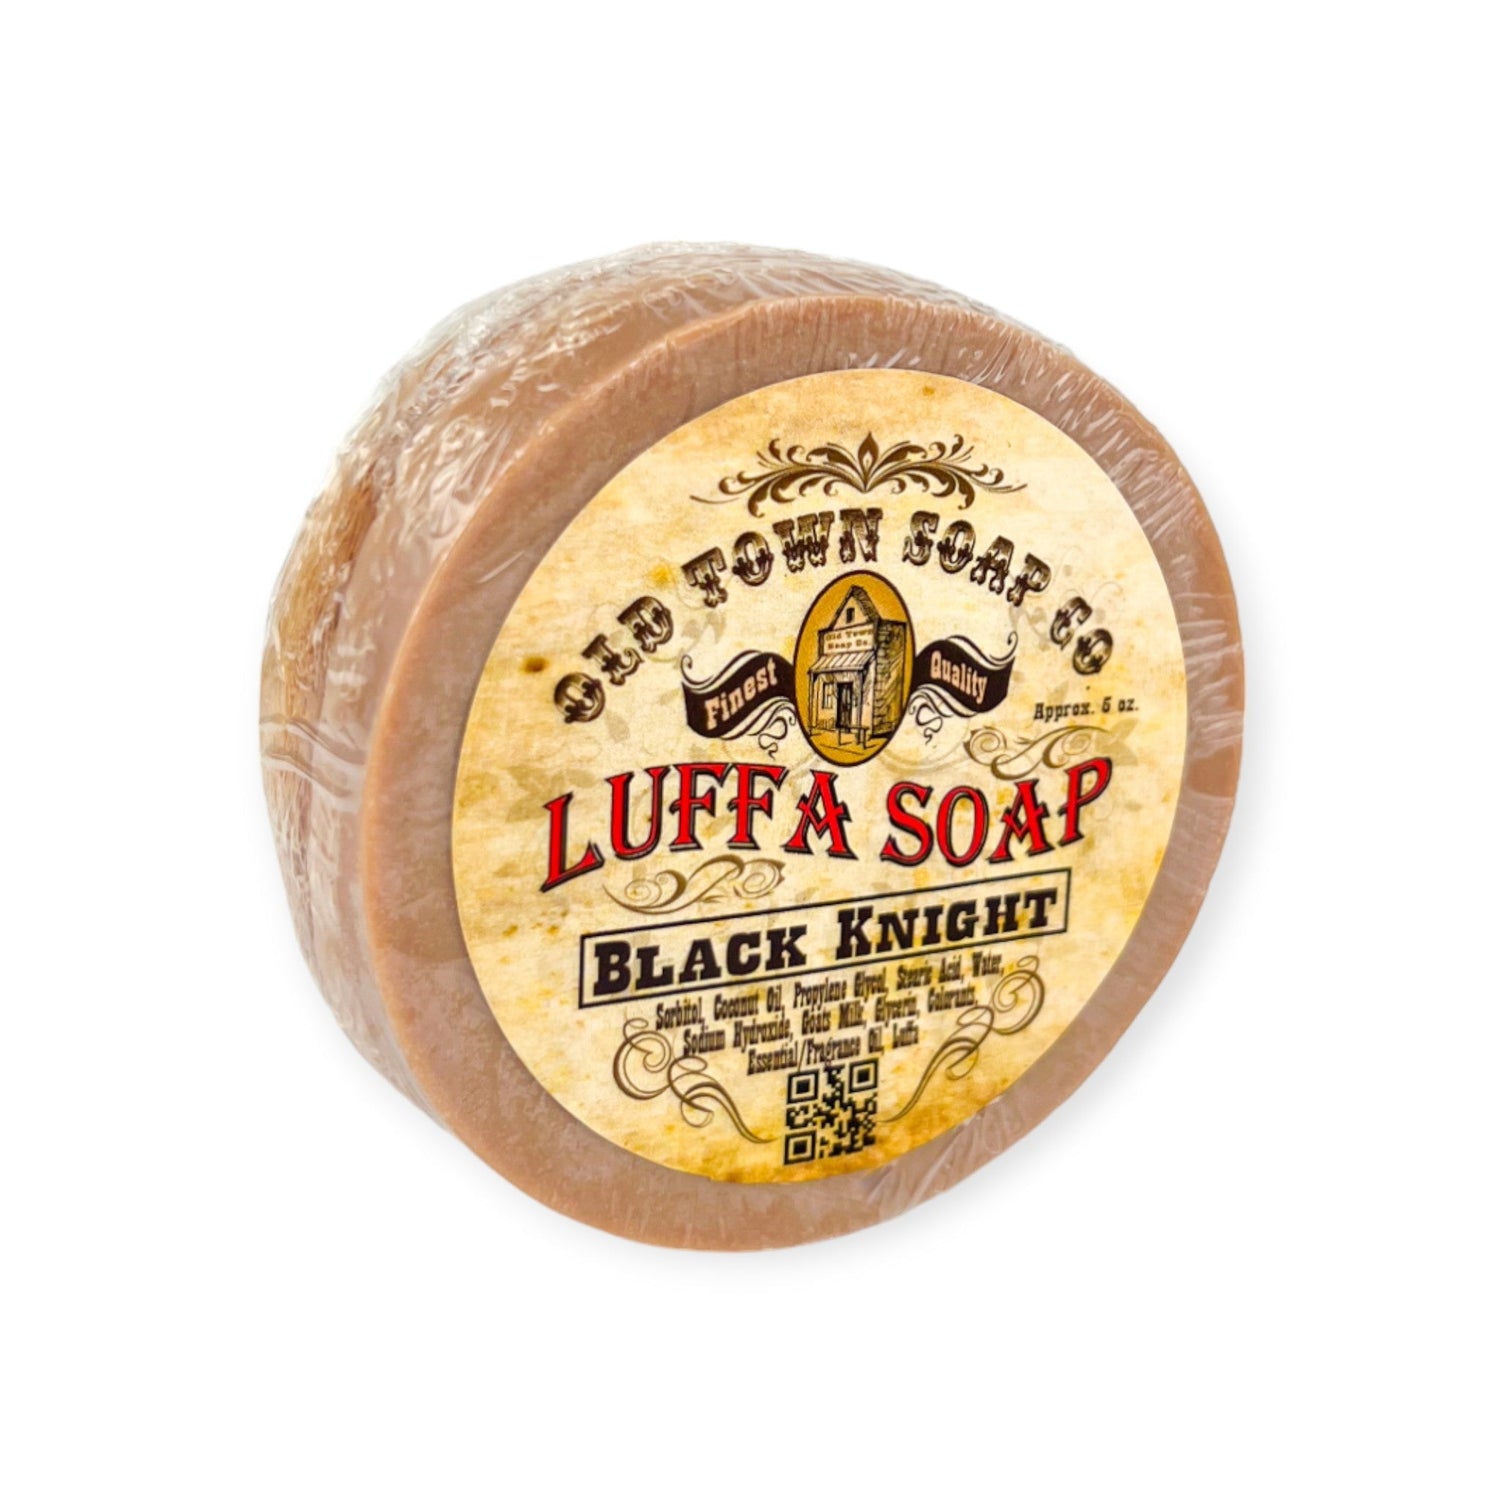 Black Knight -Luffa Soap - Old Town Soap Co.